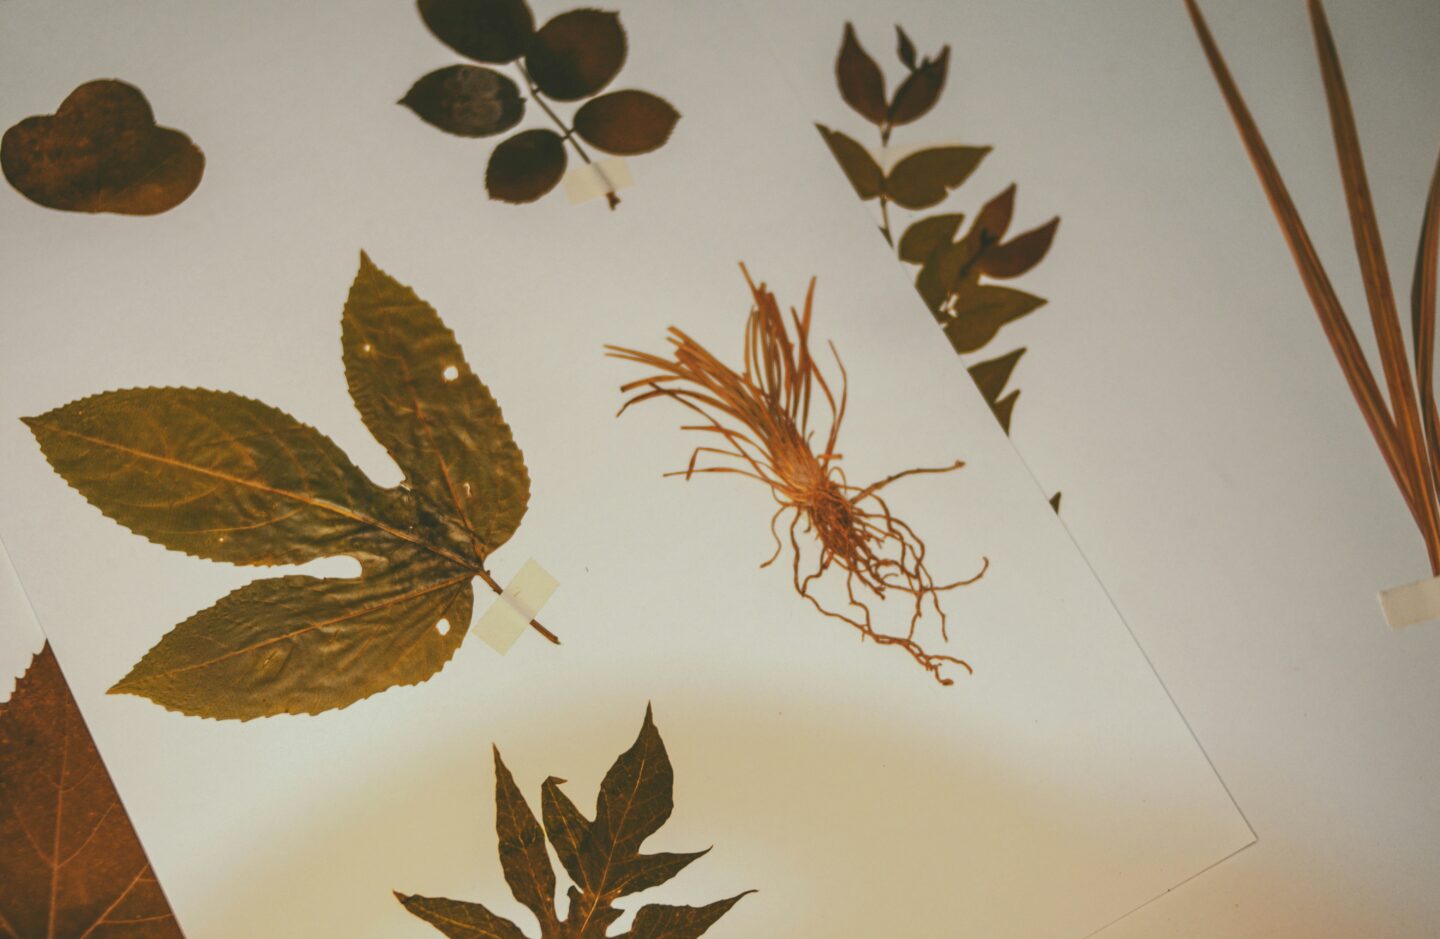 The Death of the Herbarium